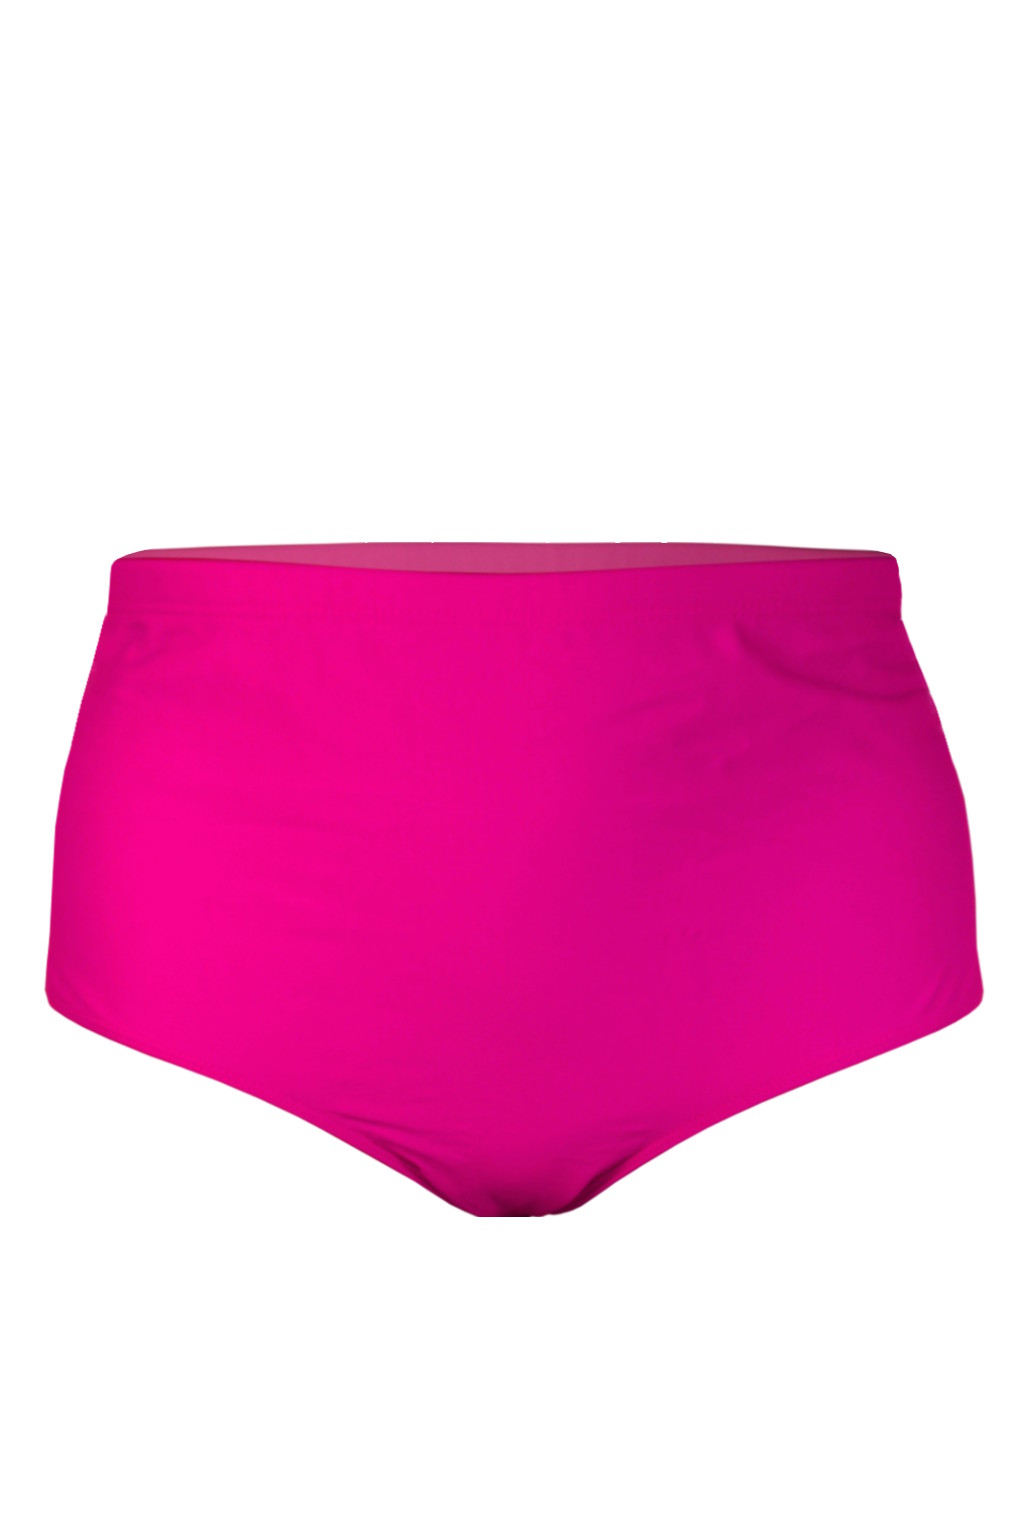 Gerrard Pink extra plavkové kalhotky do pasu růžová 4XL